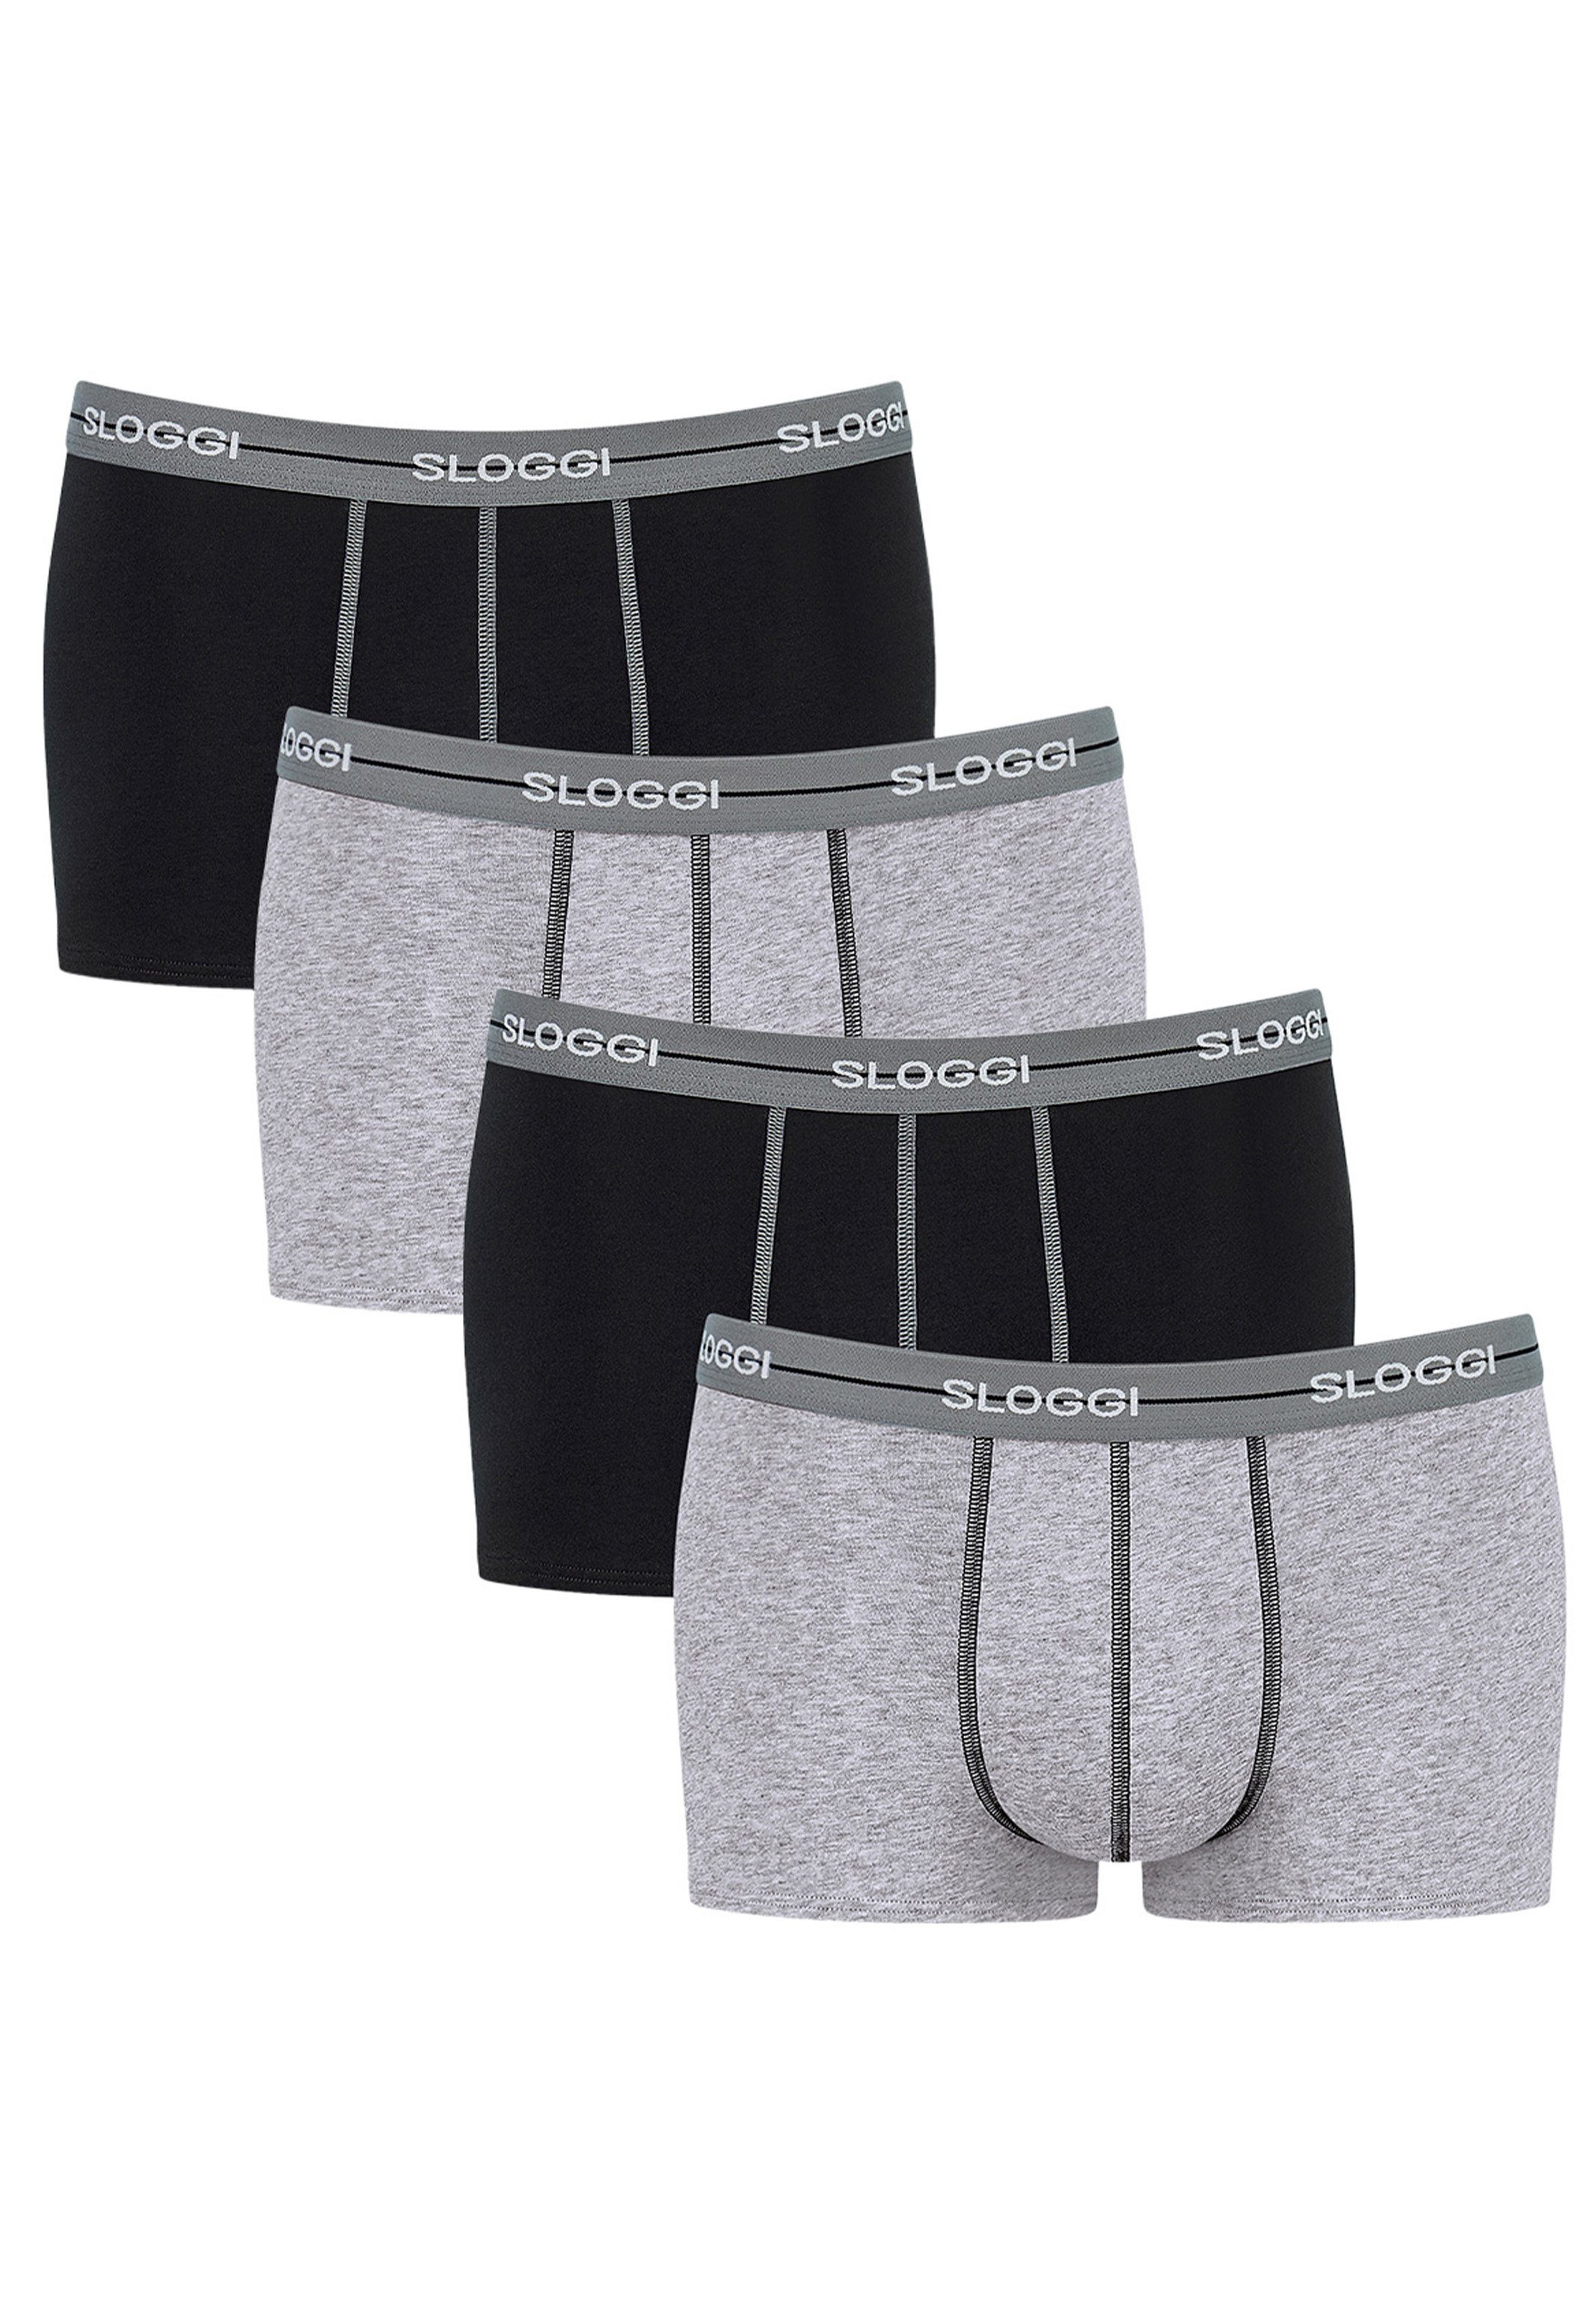 Ohne Grey Sloggi Baumwolle 4er Retro Start Boxer Pant Hipster - / 4-St) - - (Spar-Set, Extra Combination Eingriff Pack weiches Taillenband